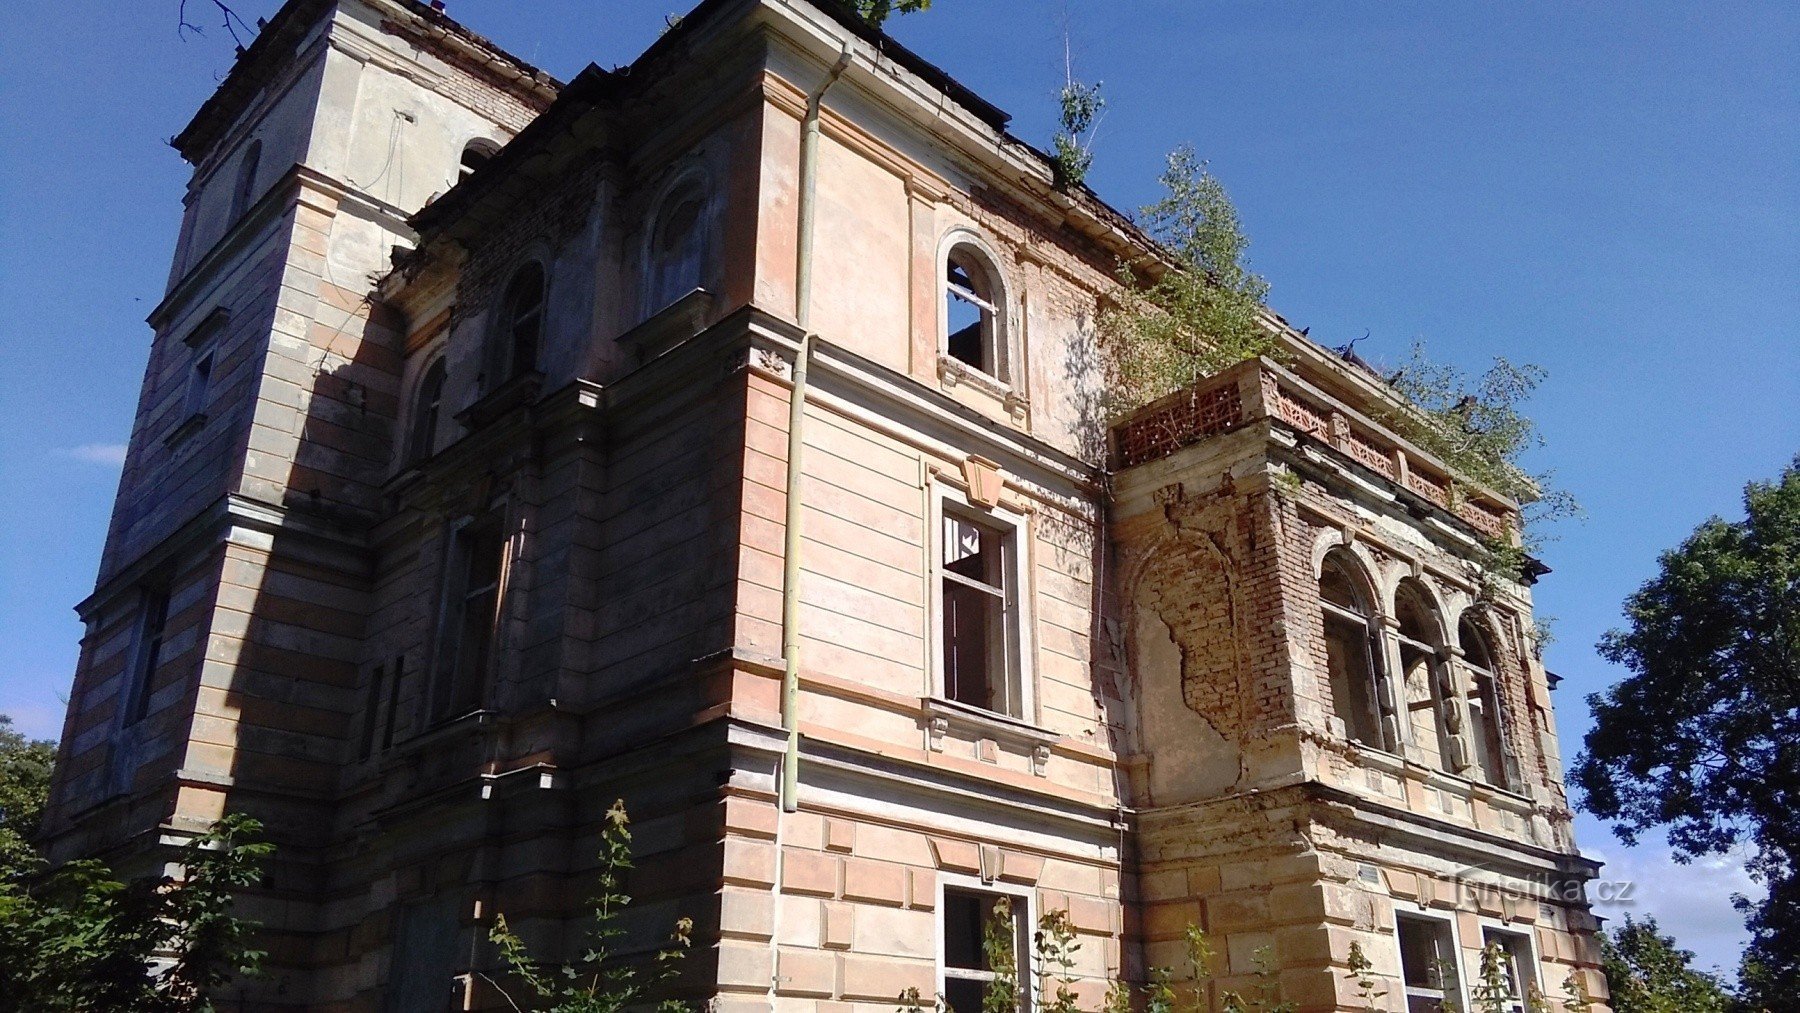 Dubí - en villa, nu en ruin, engang repræsentativ bolig for fabrikanten Tschinkels